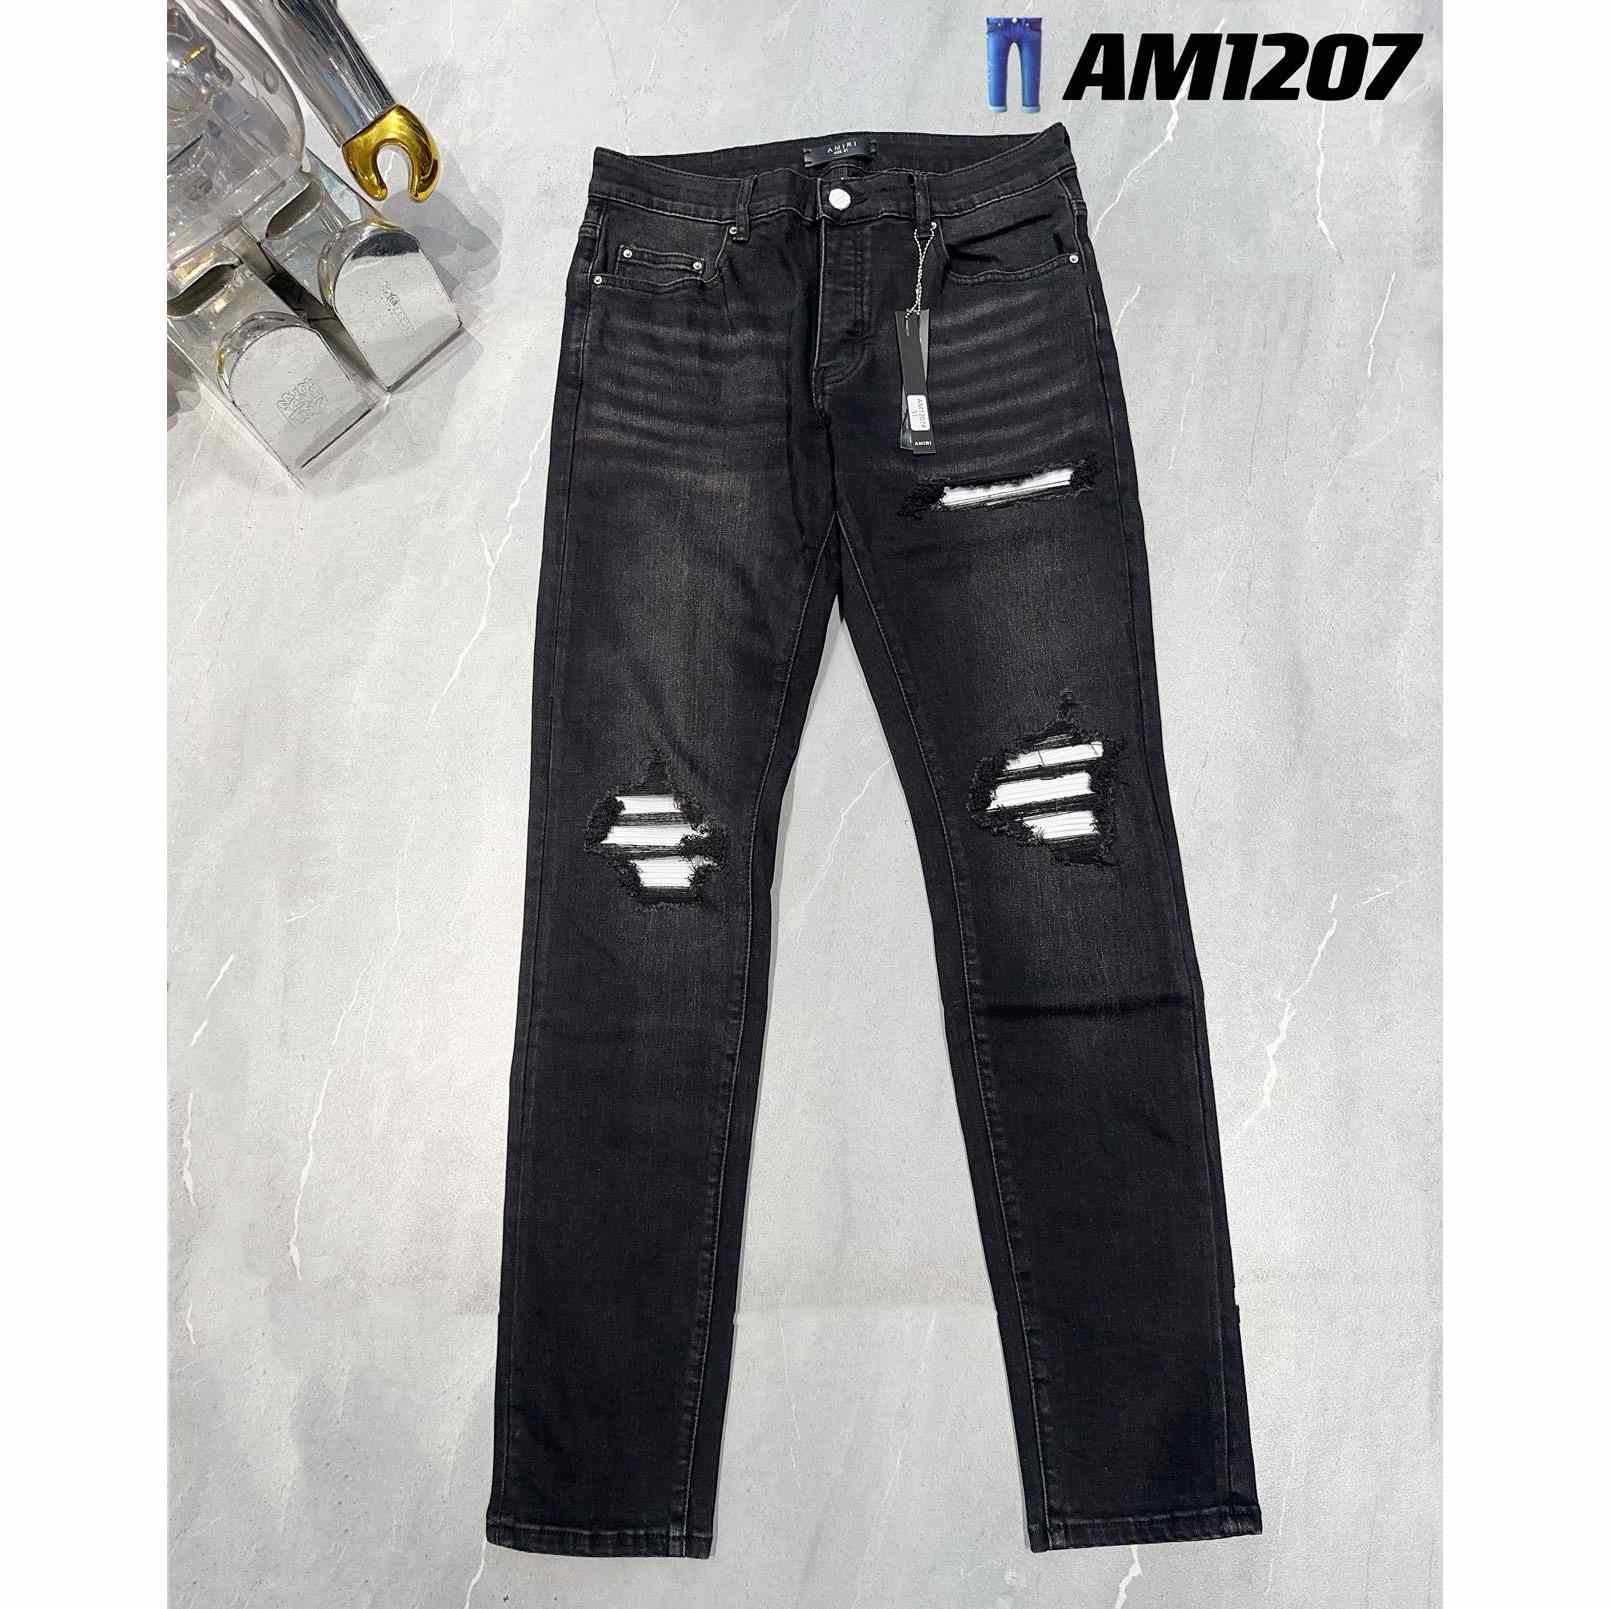 Amiri Jeans     AM1207 - everydesigner